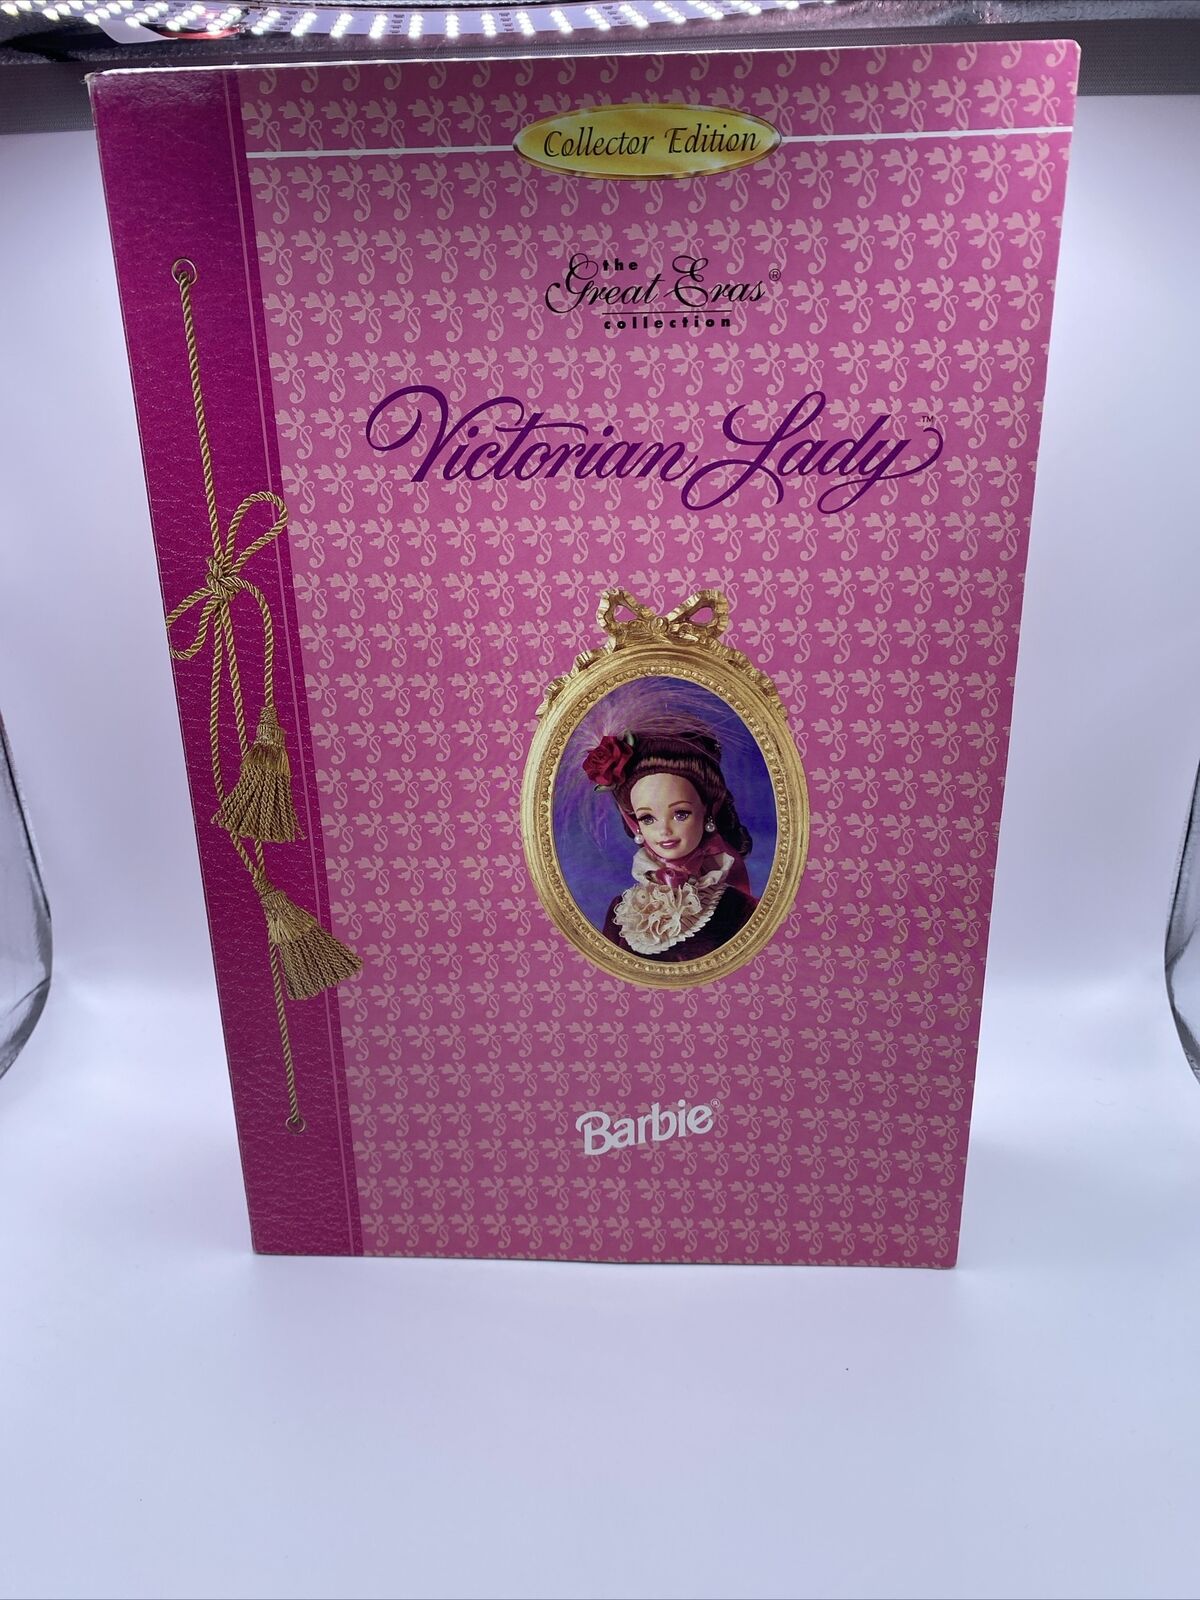 VICTORIAN LADY BARBIE COLLECTOR EDITION GREAT ERAS COLLECTION 1995-READ DESC.